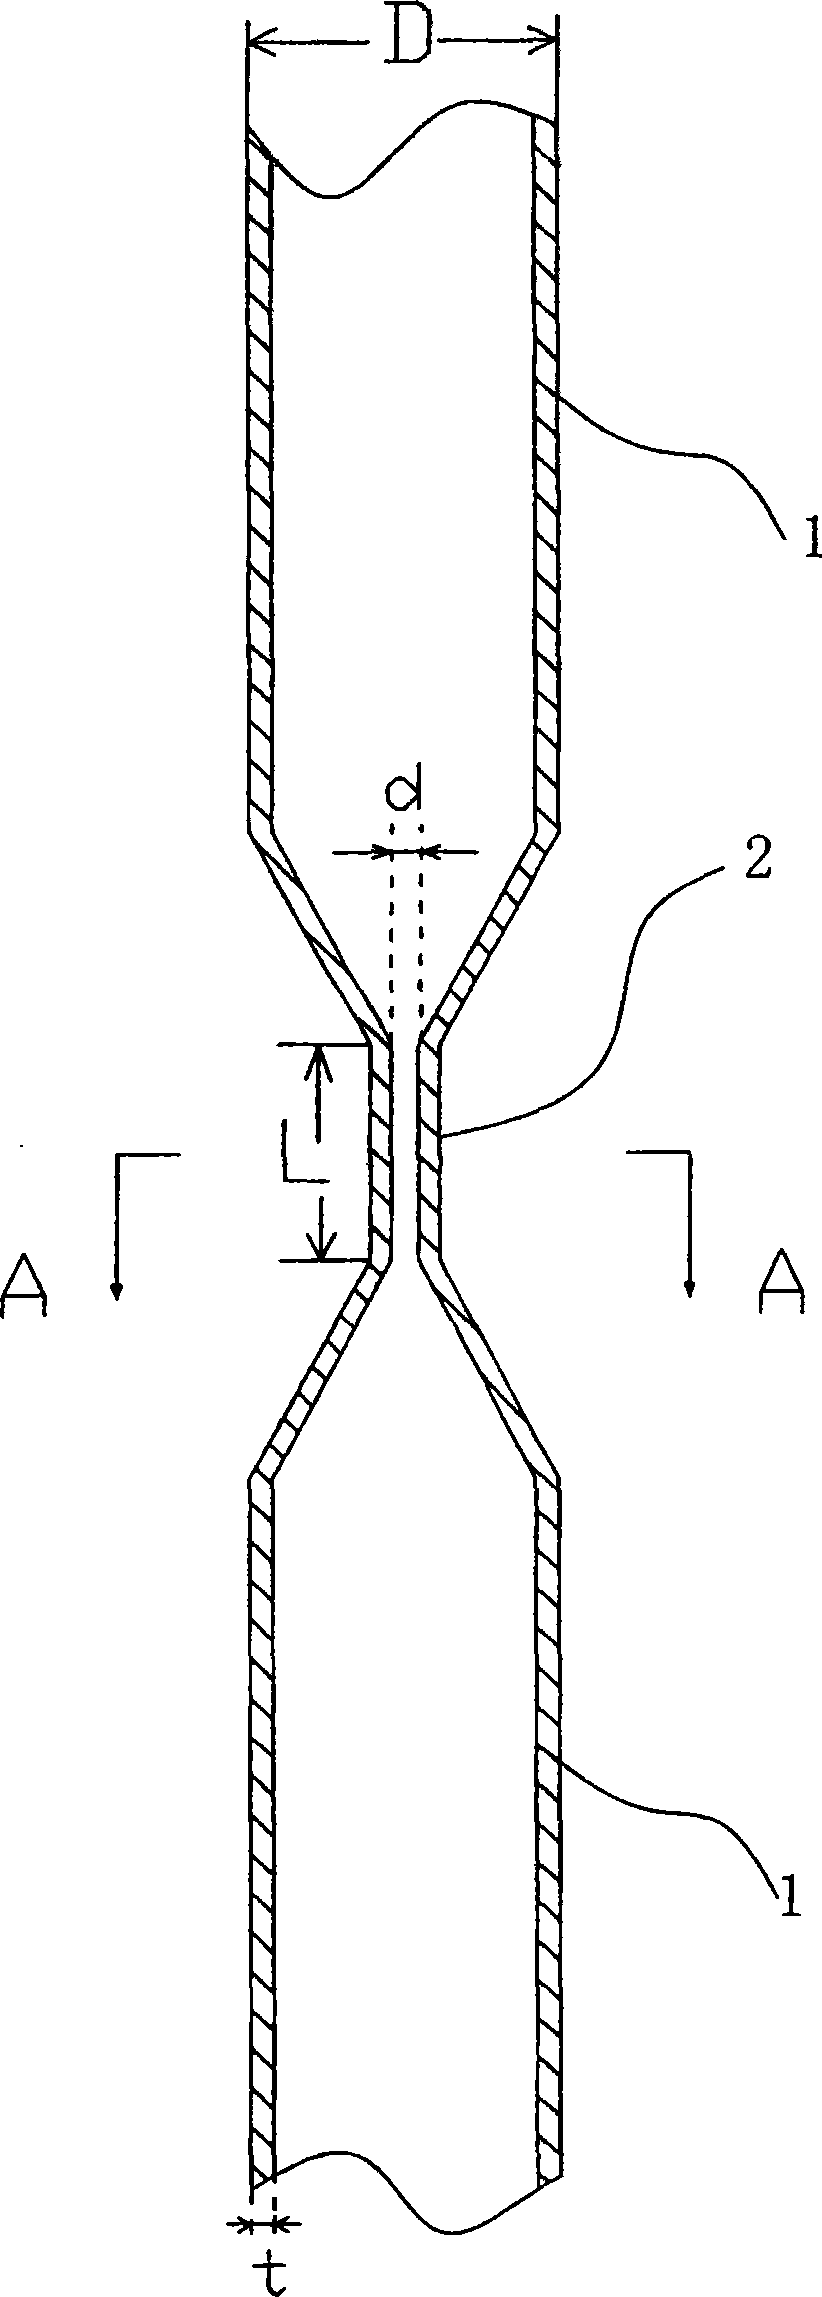 Outward convex integrated throttle valve